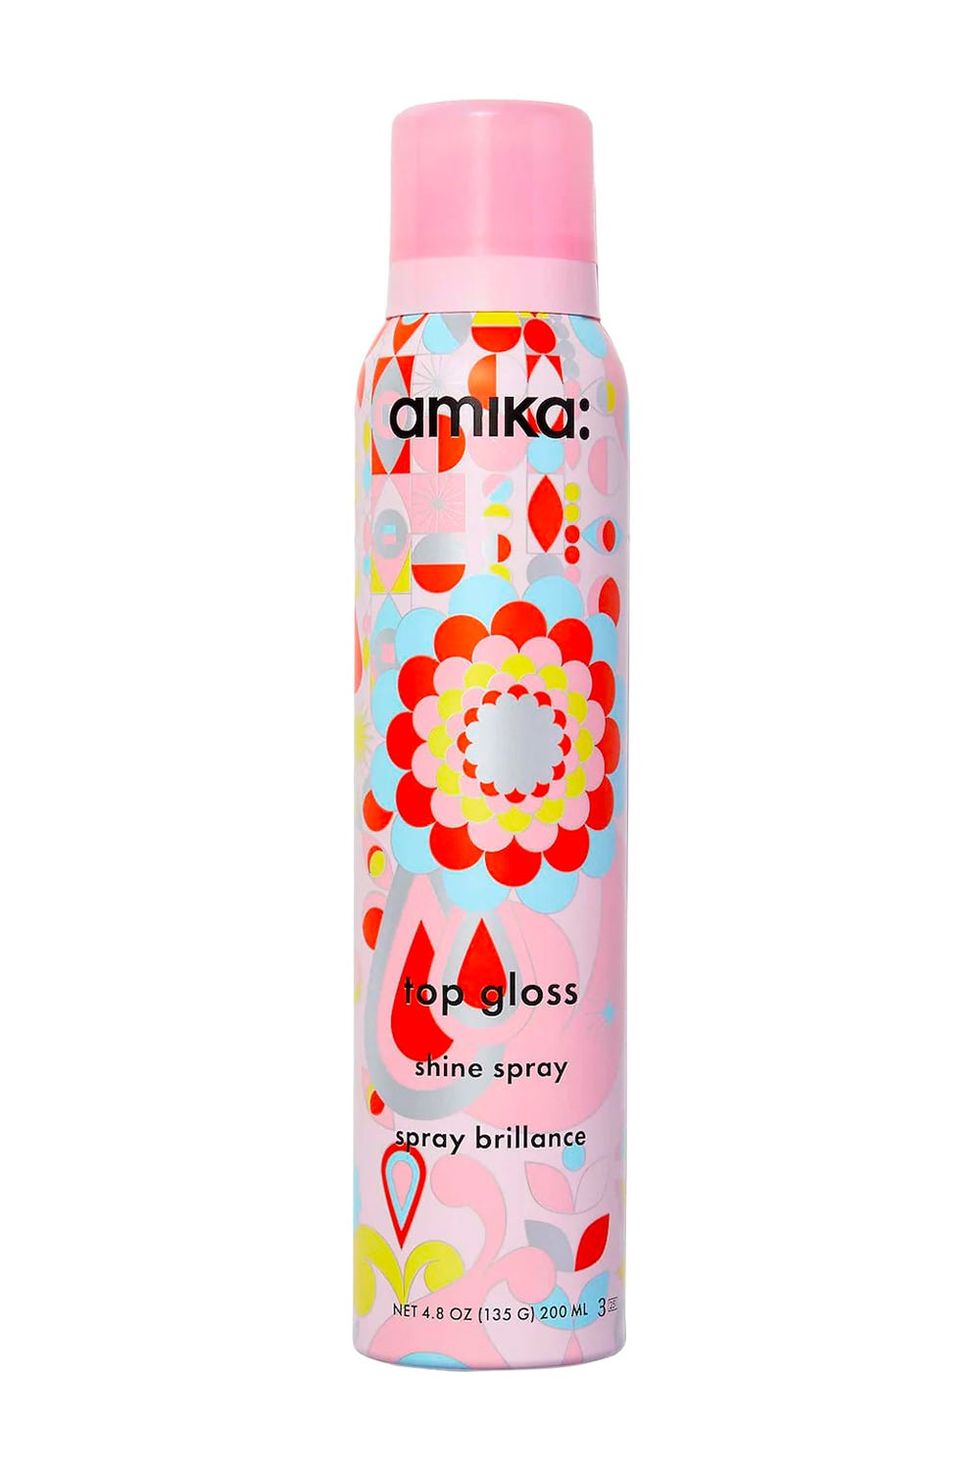 Amika Top Gloss Hair Shine Spray